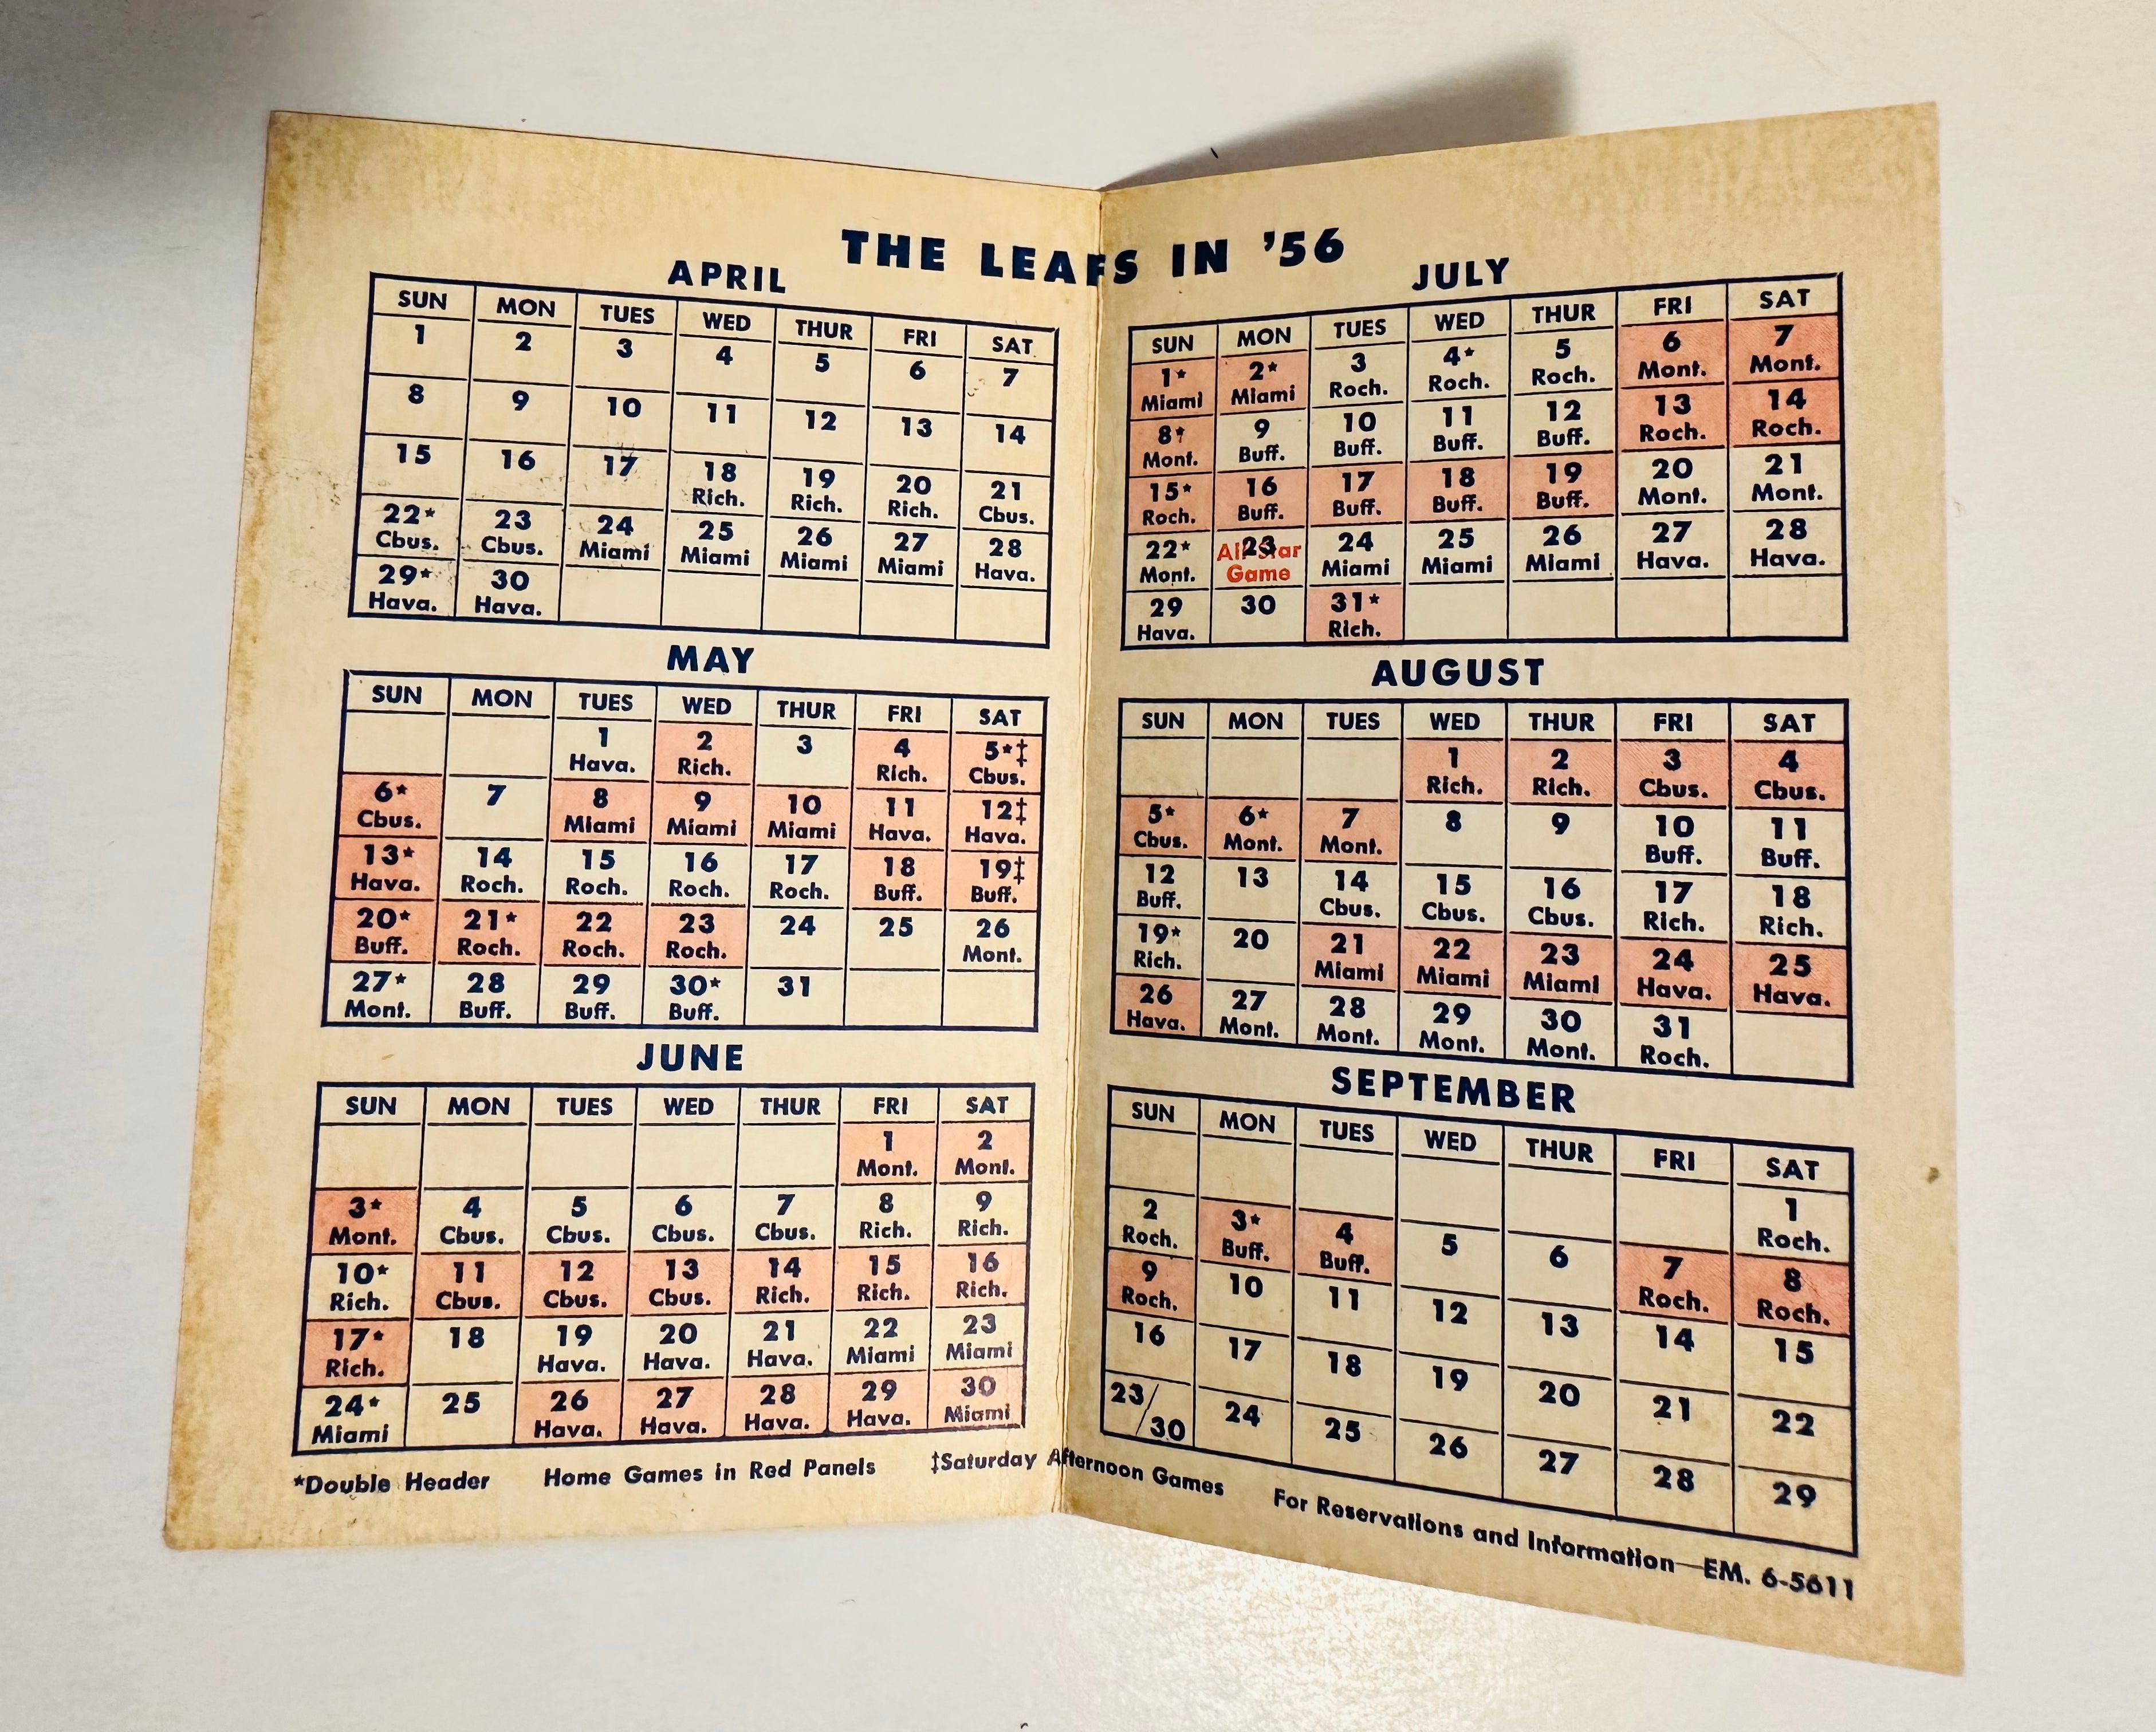 Toronto Maple Leafs baseball rare schedule 1956